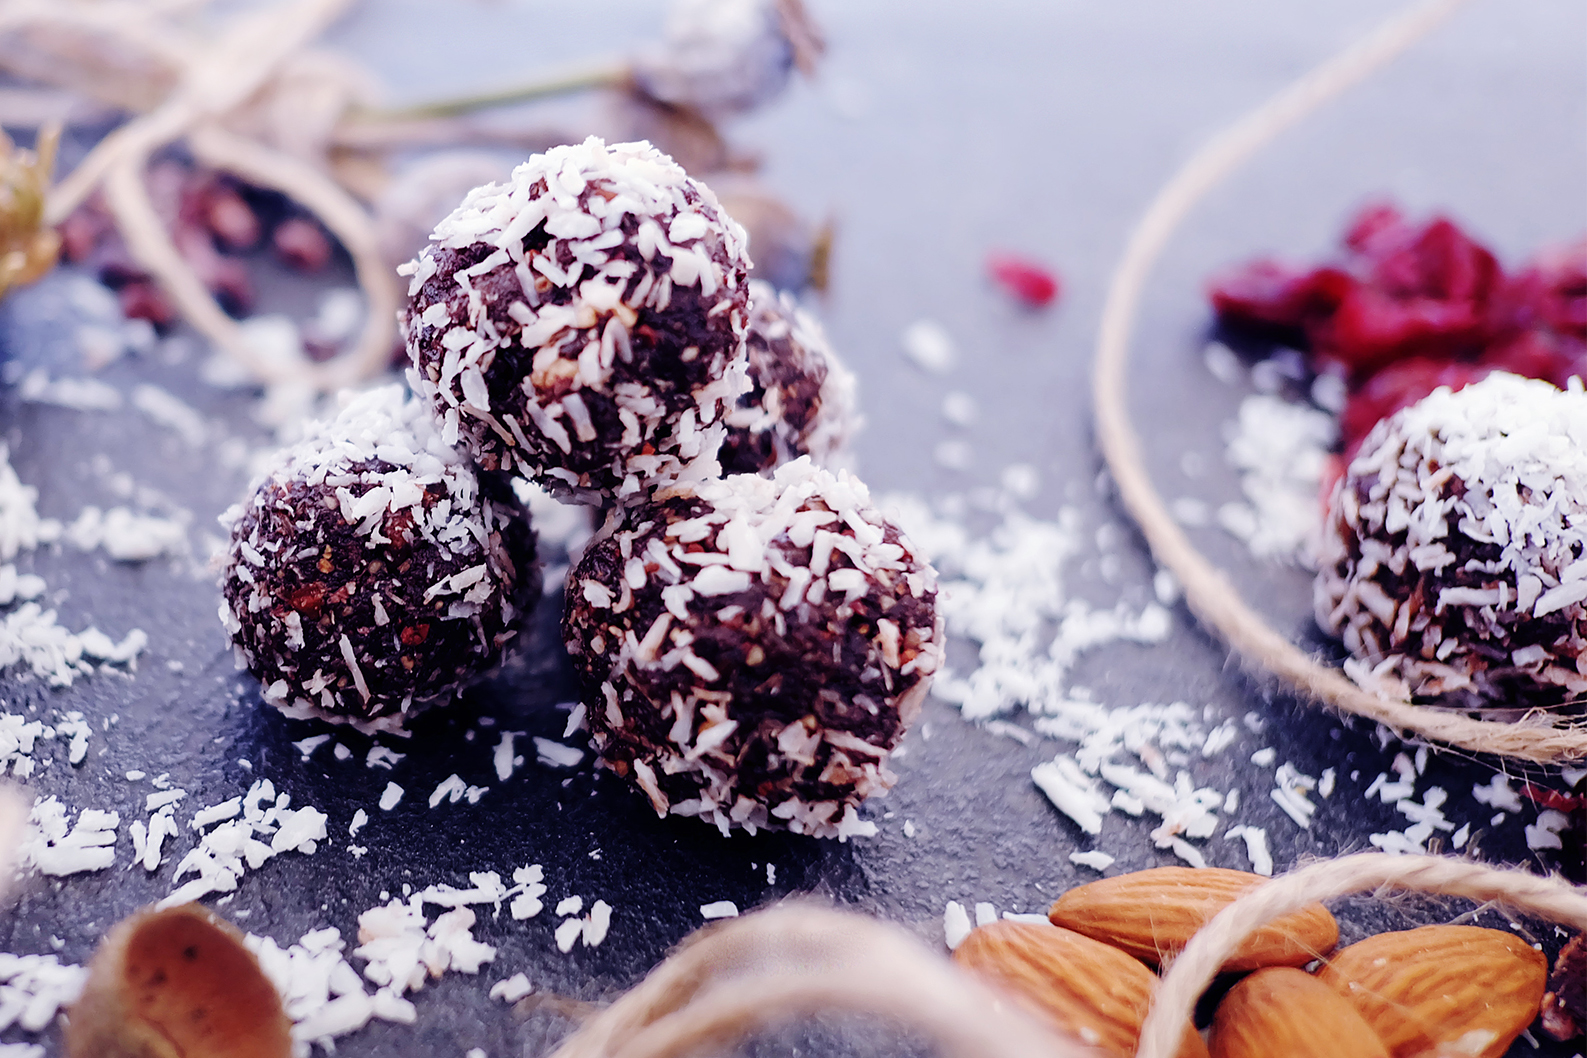 Recipe: Almost-chocolate Date Balls